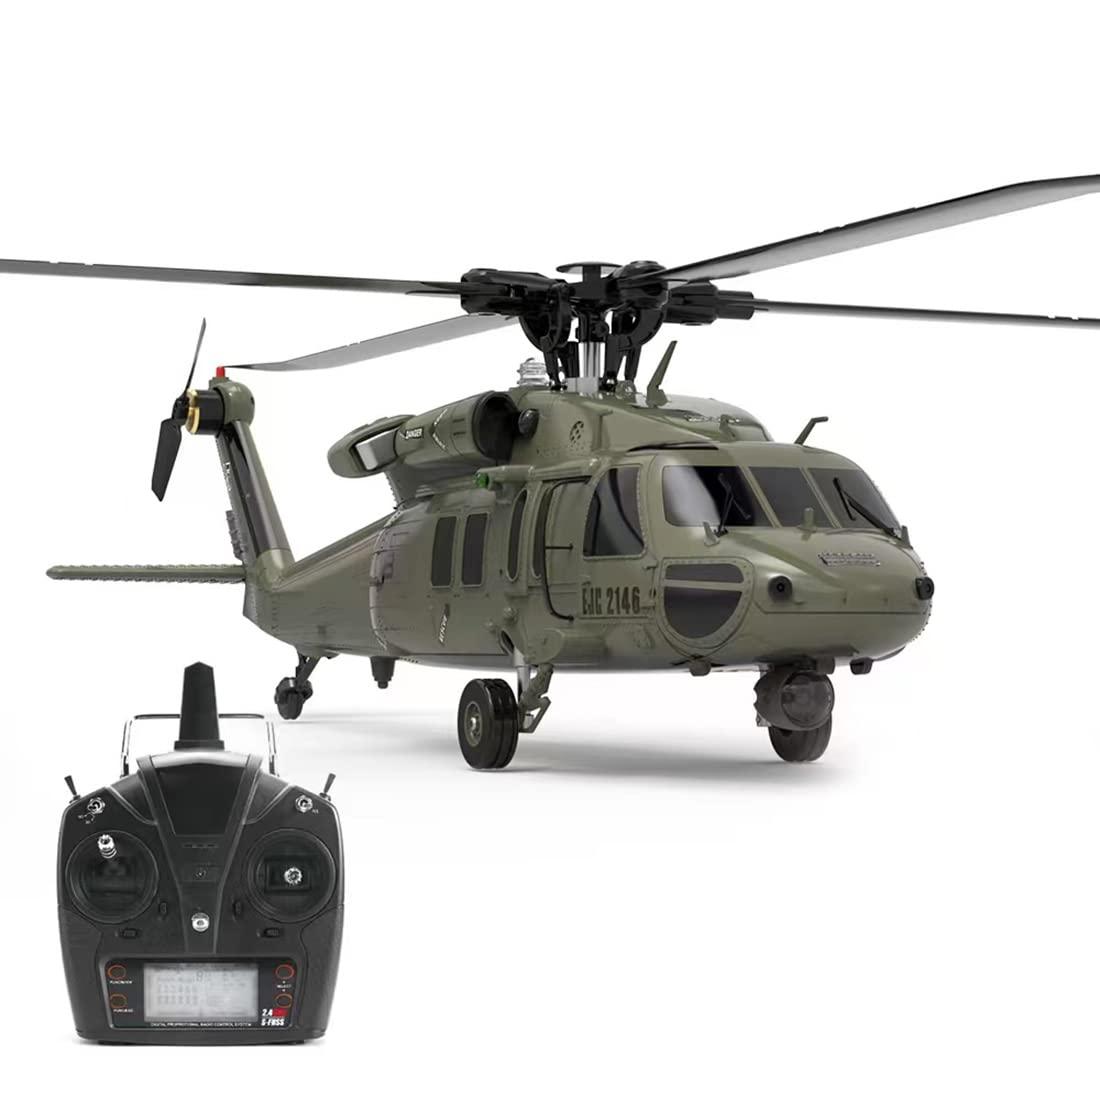 Remote Control Super Helicopter: Top Remote Control Super Helicopter Models and Prices